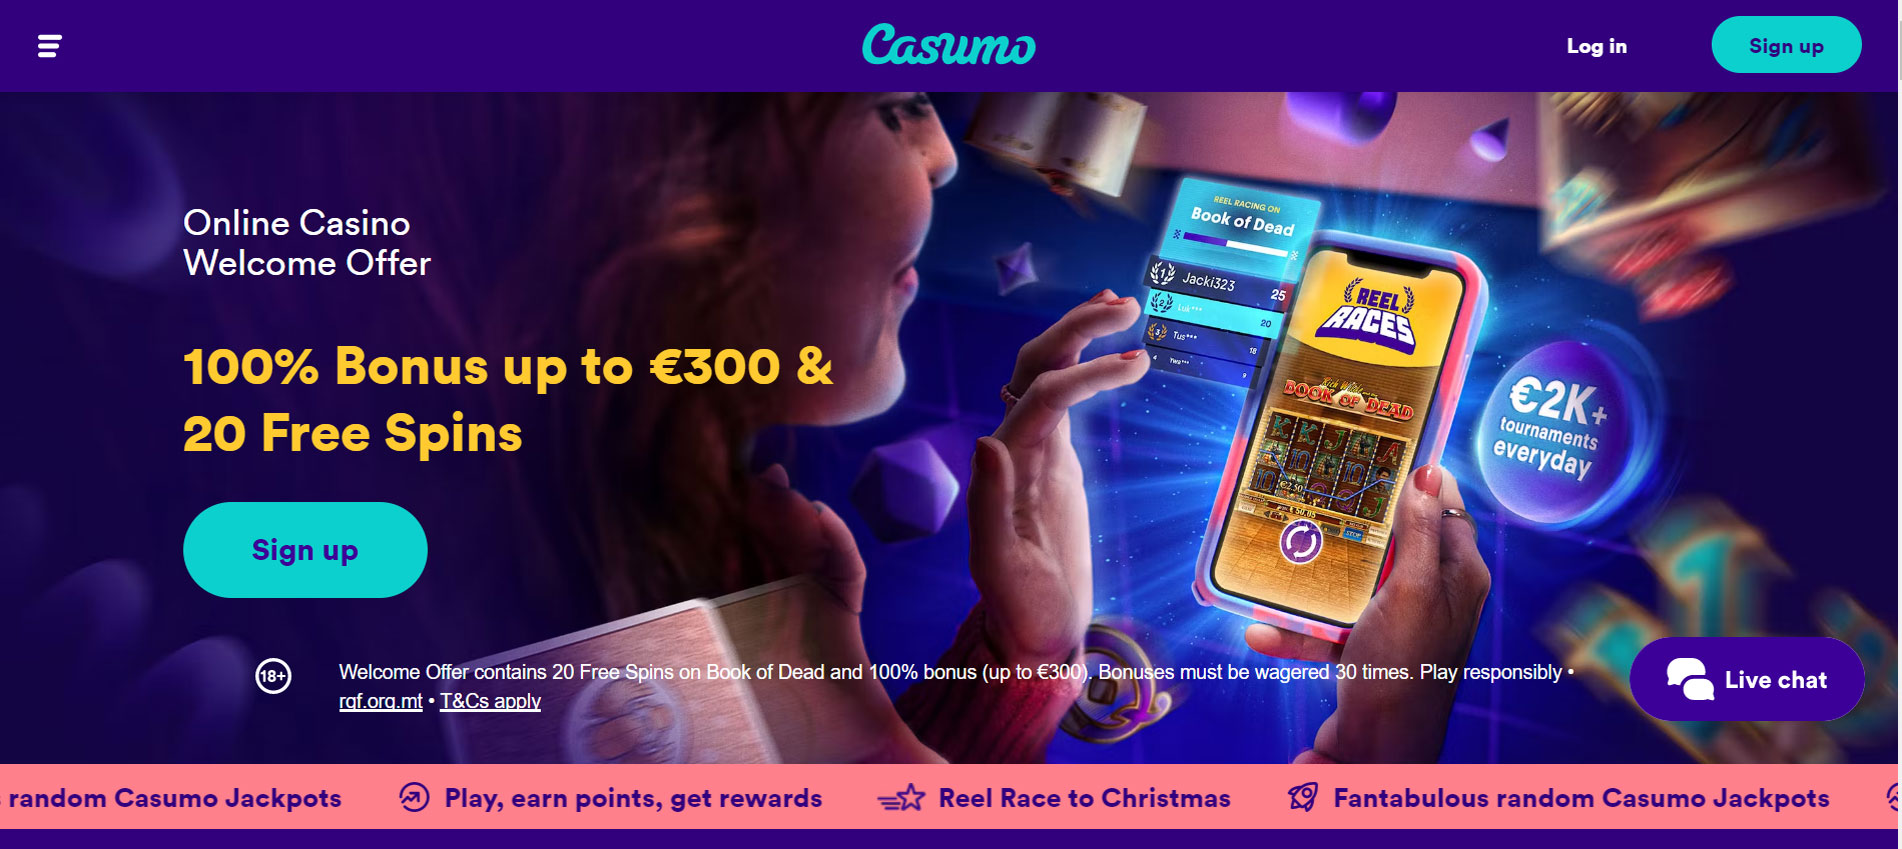 Casumo Casino Home Screen